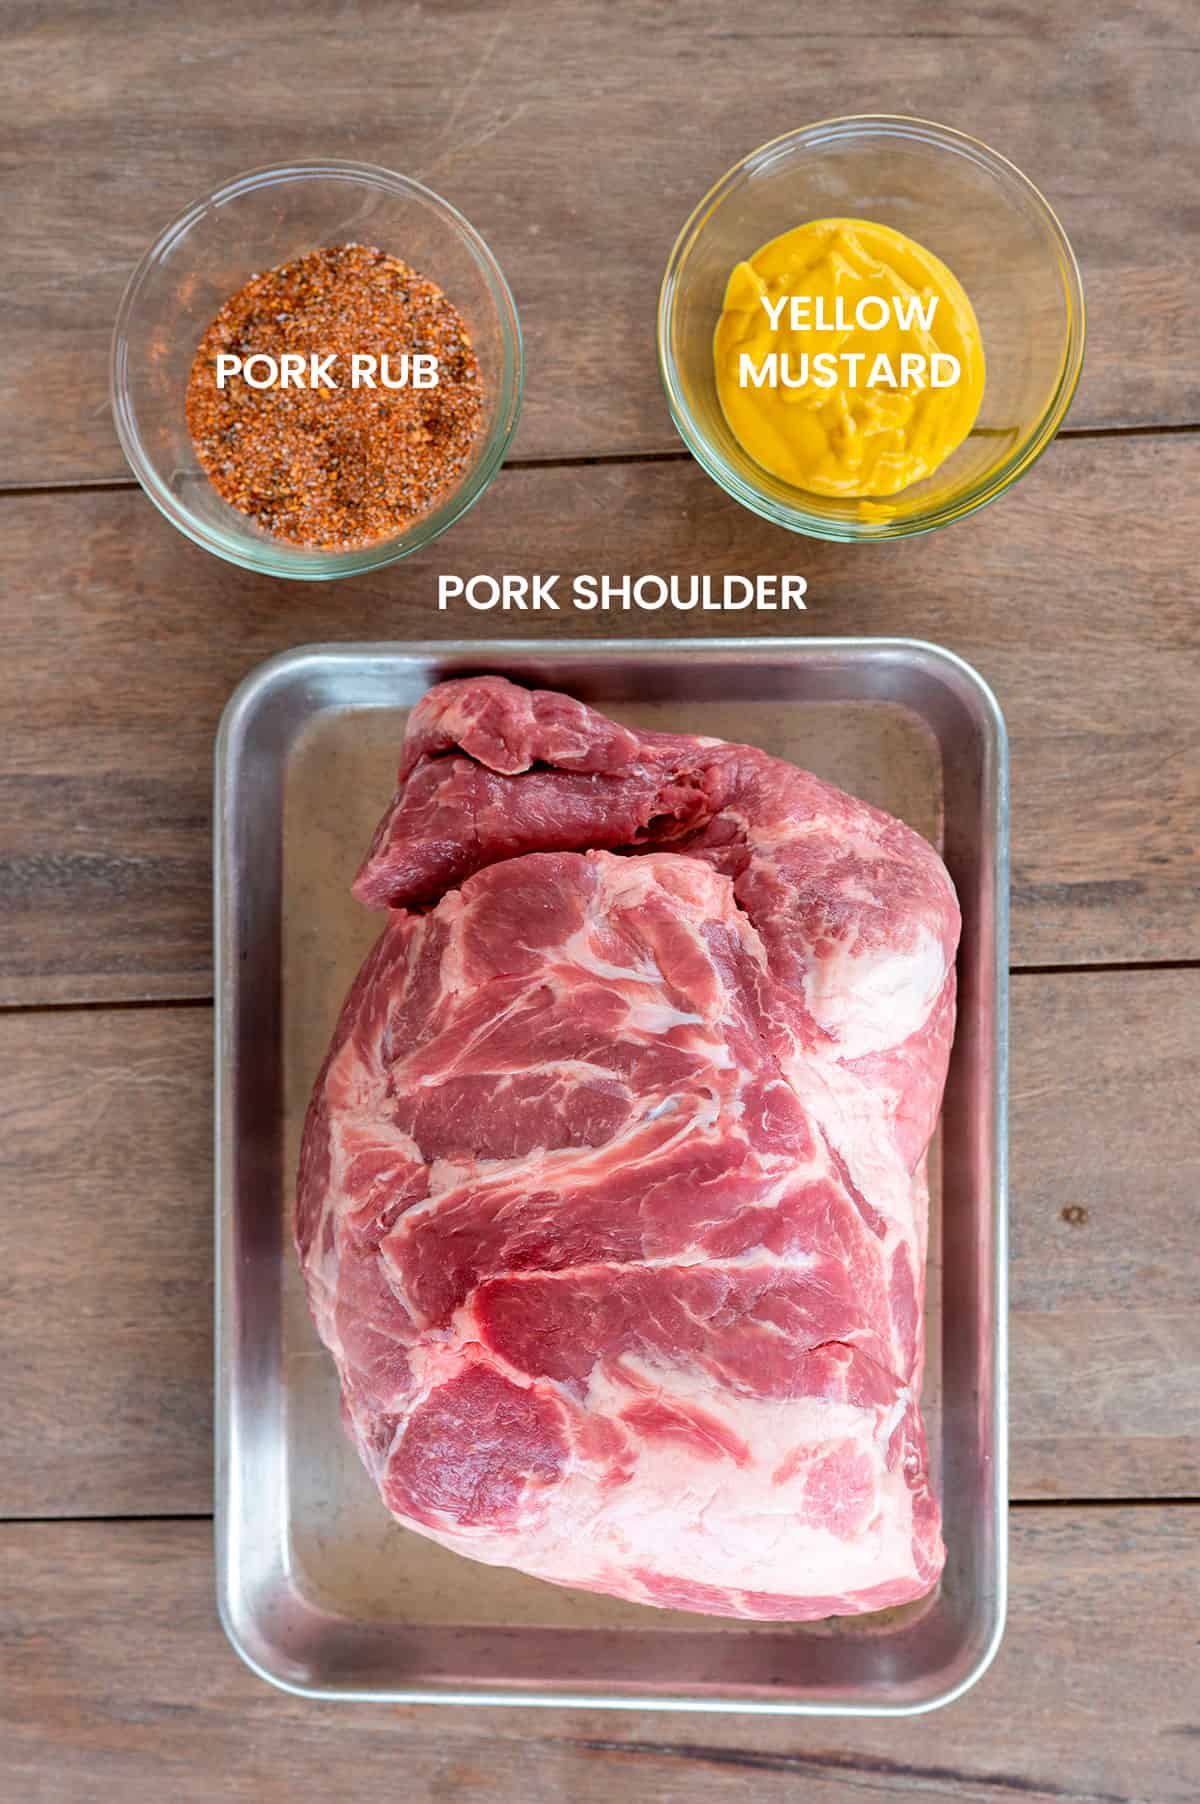 pulled pork ingredients: pork shoulder, pork rub, yellow mustard.